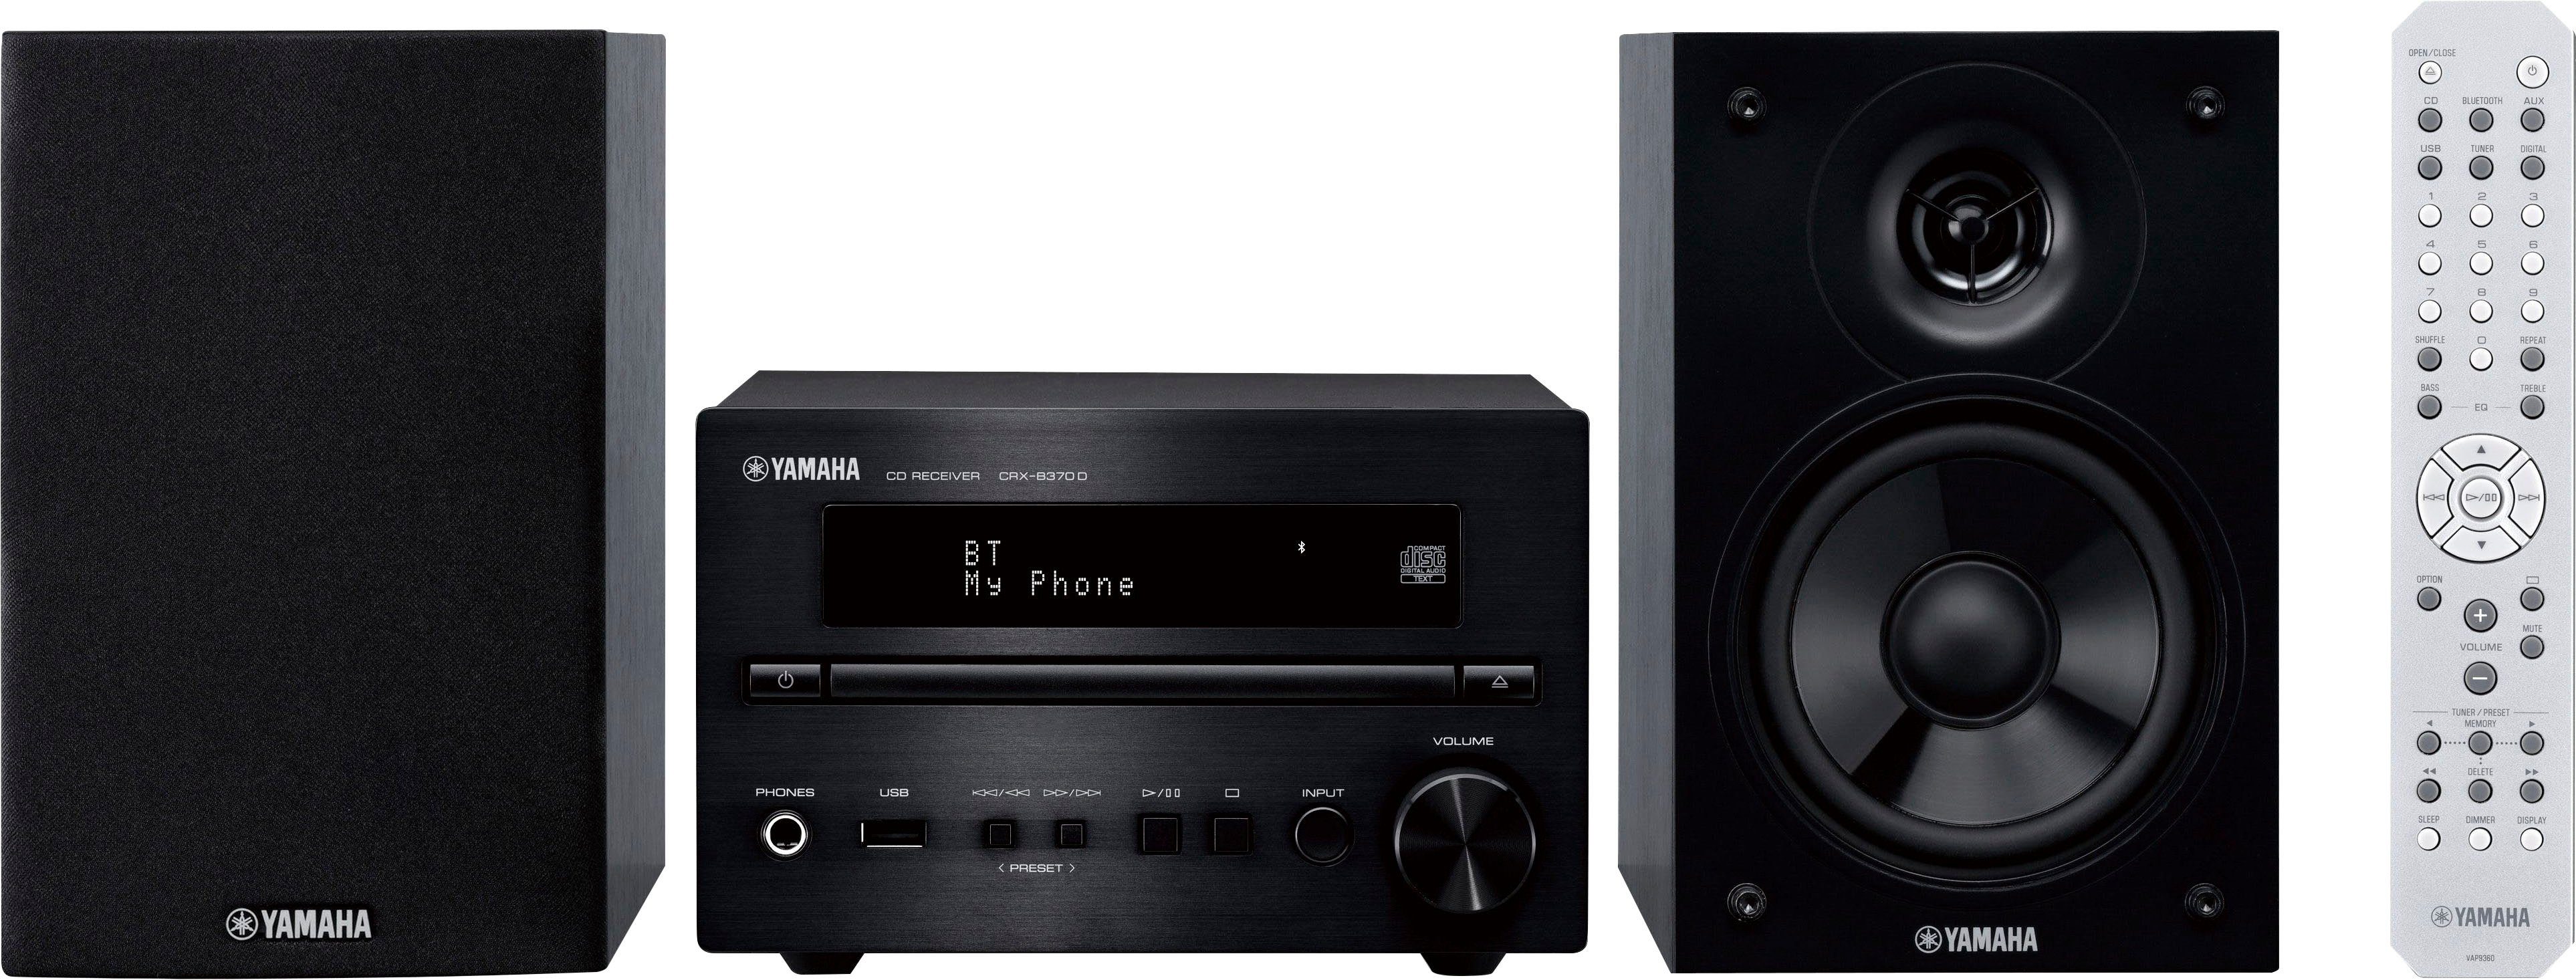 Yamaha MCR-B270D Digitalradio (Digitalradio (DAB) W) 40 schwarz (DAB), FM-Tuner